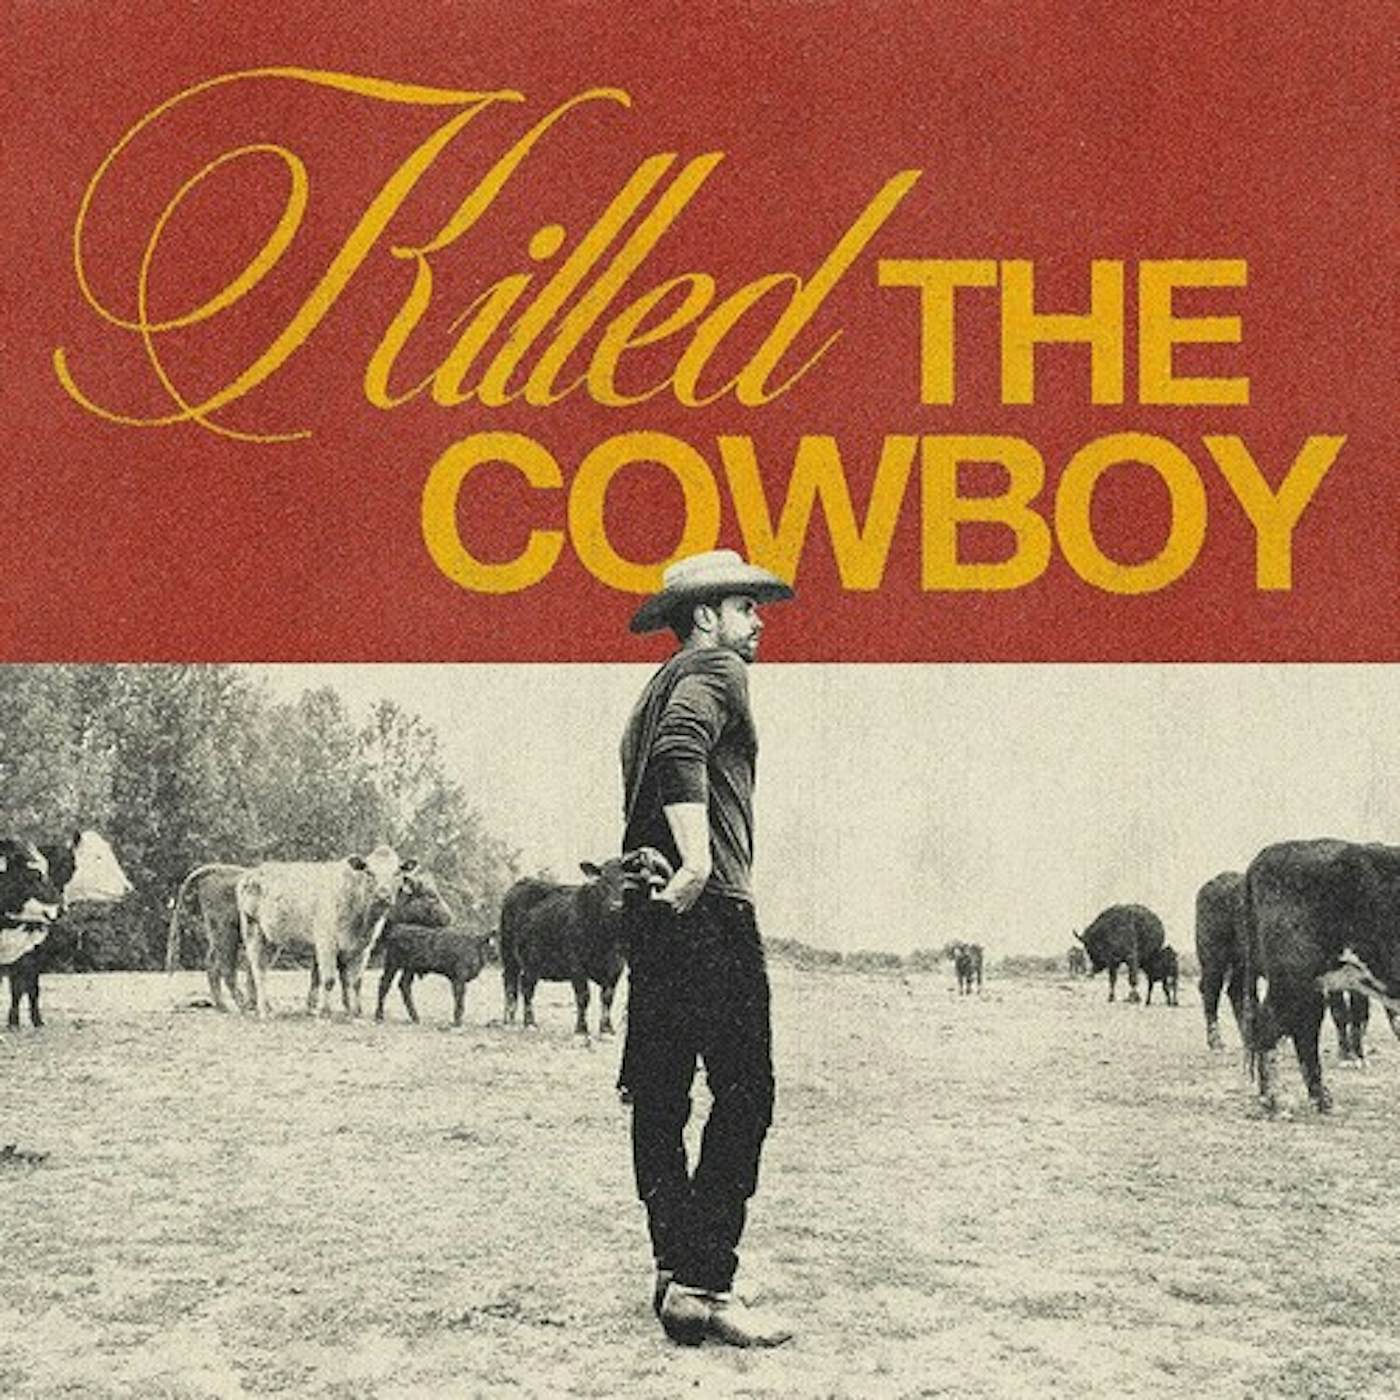 Dustin Lynch Killed The Cowboy Vinyl Record